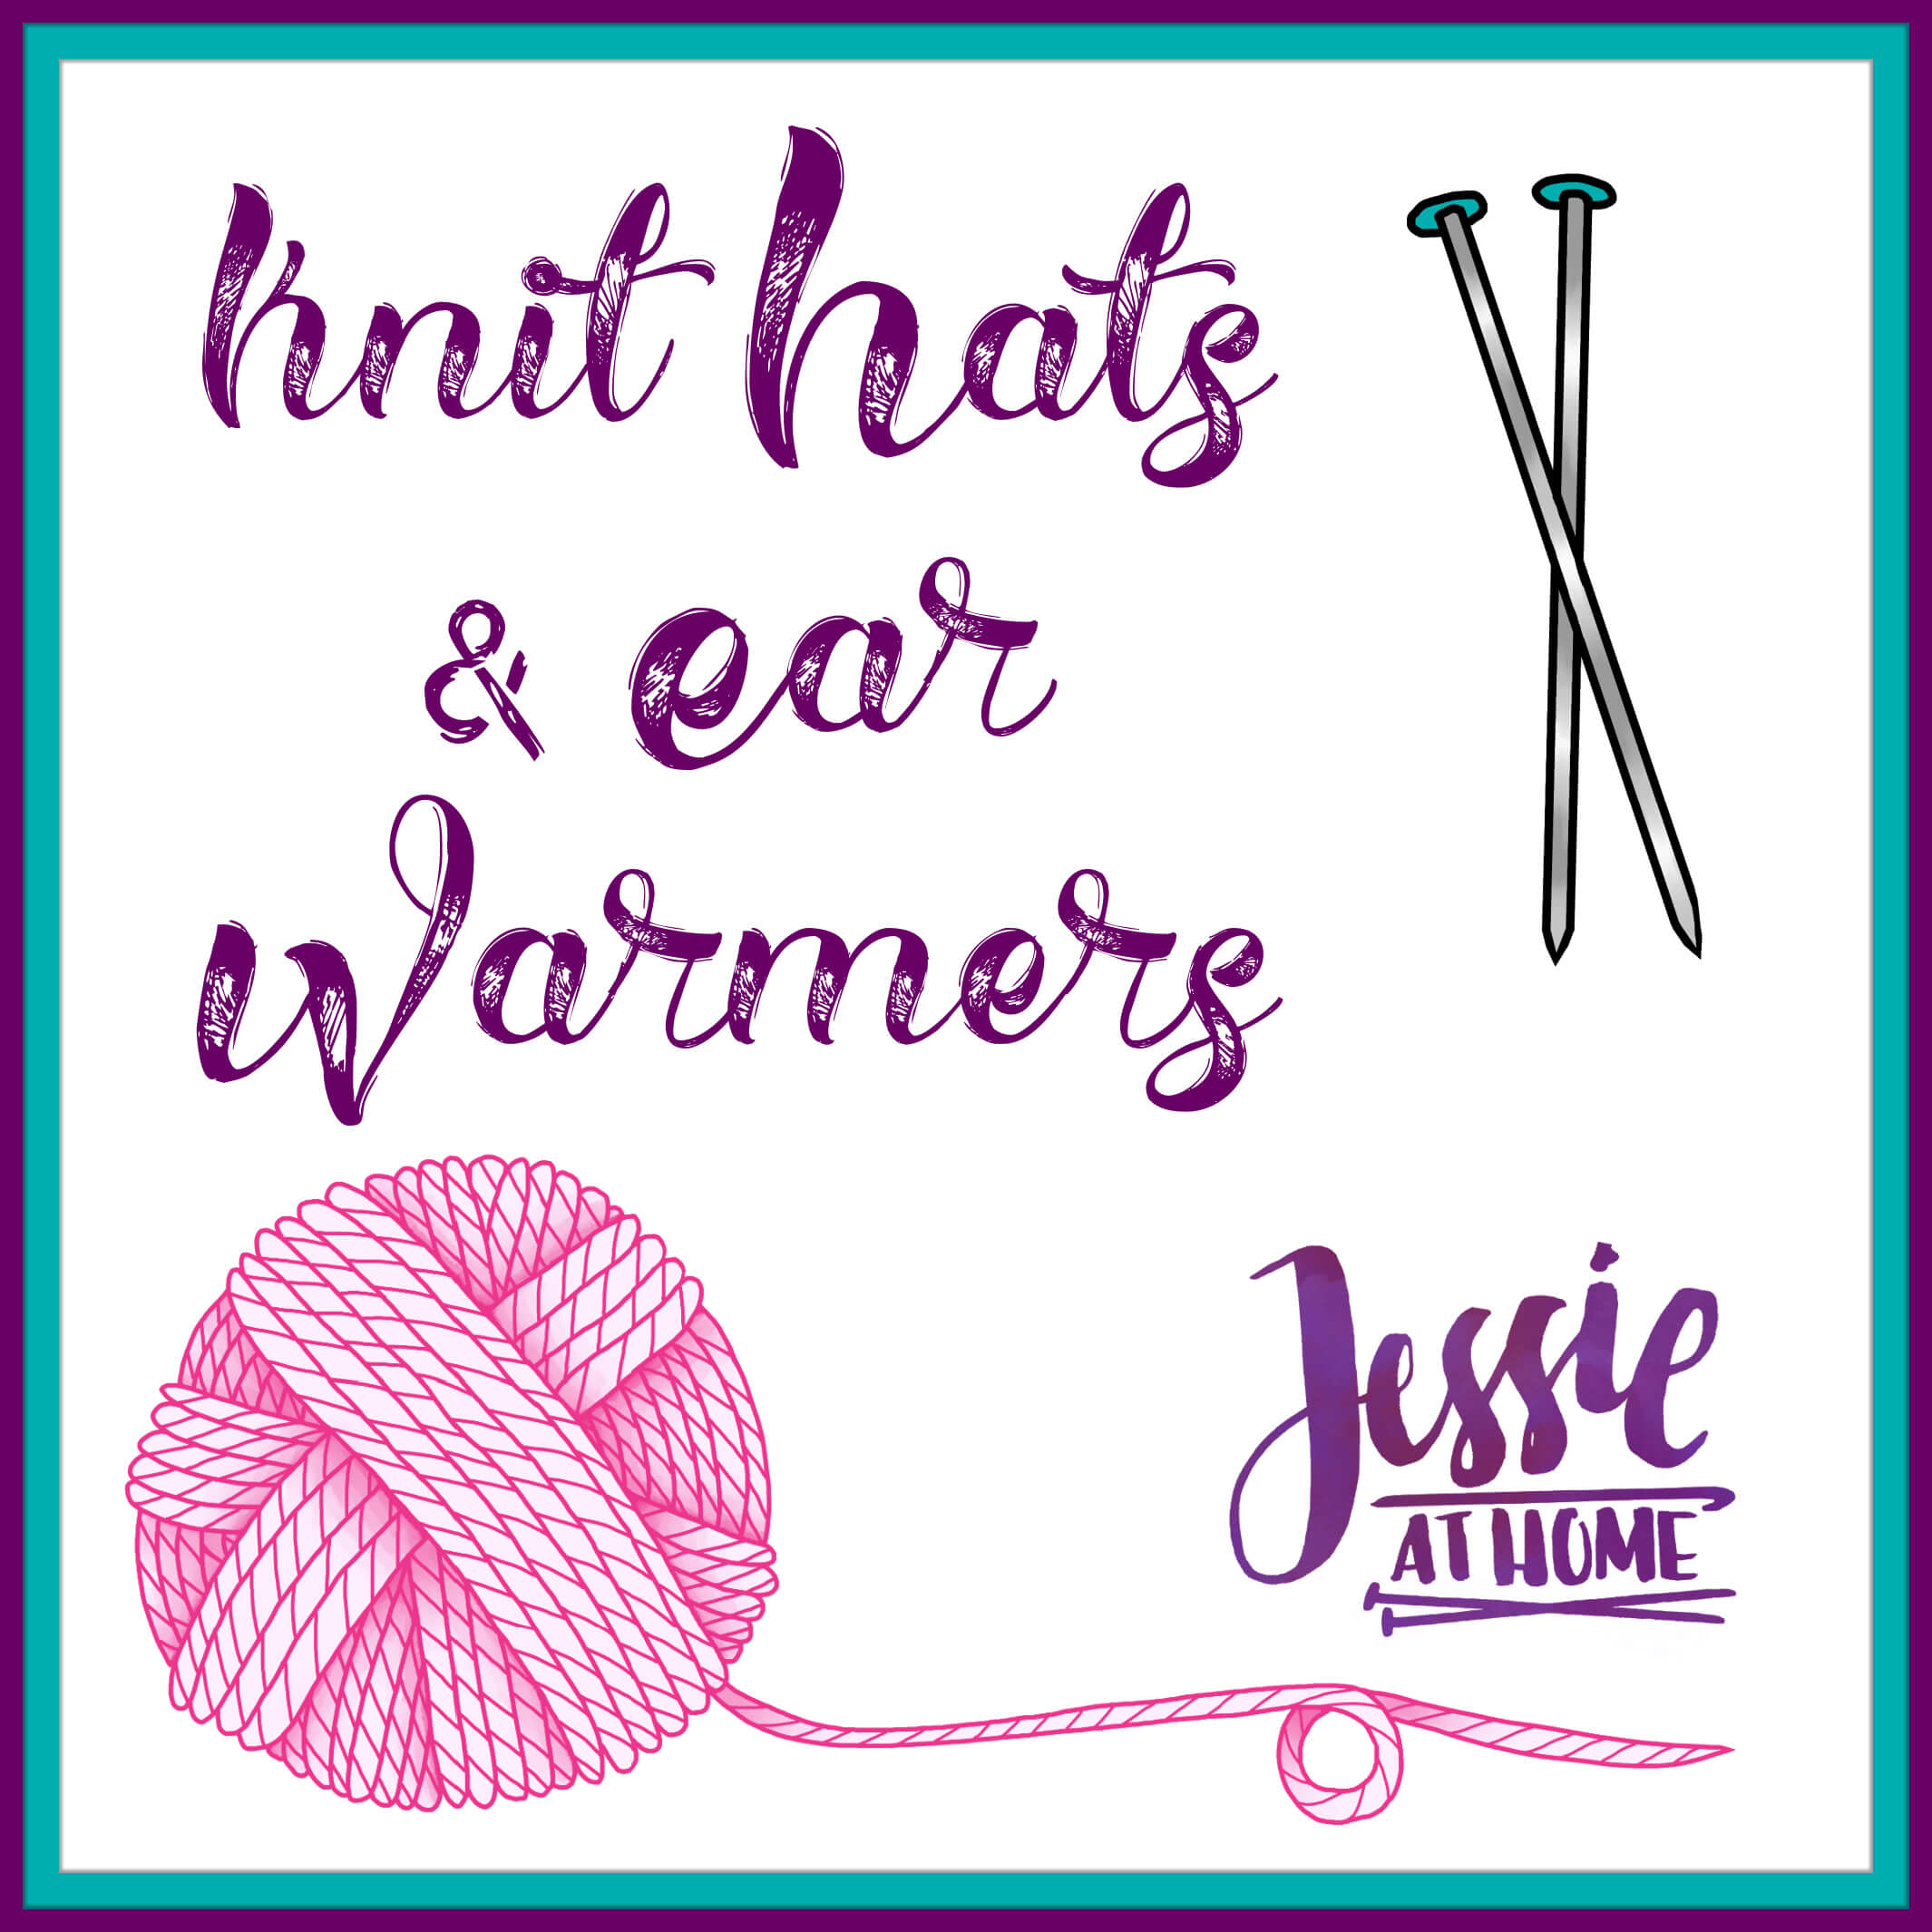 Knit Hats & Ear Warmers Menu on Jessie At Home